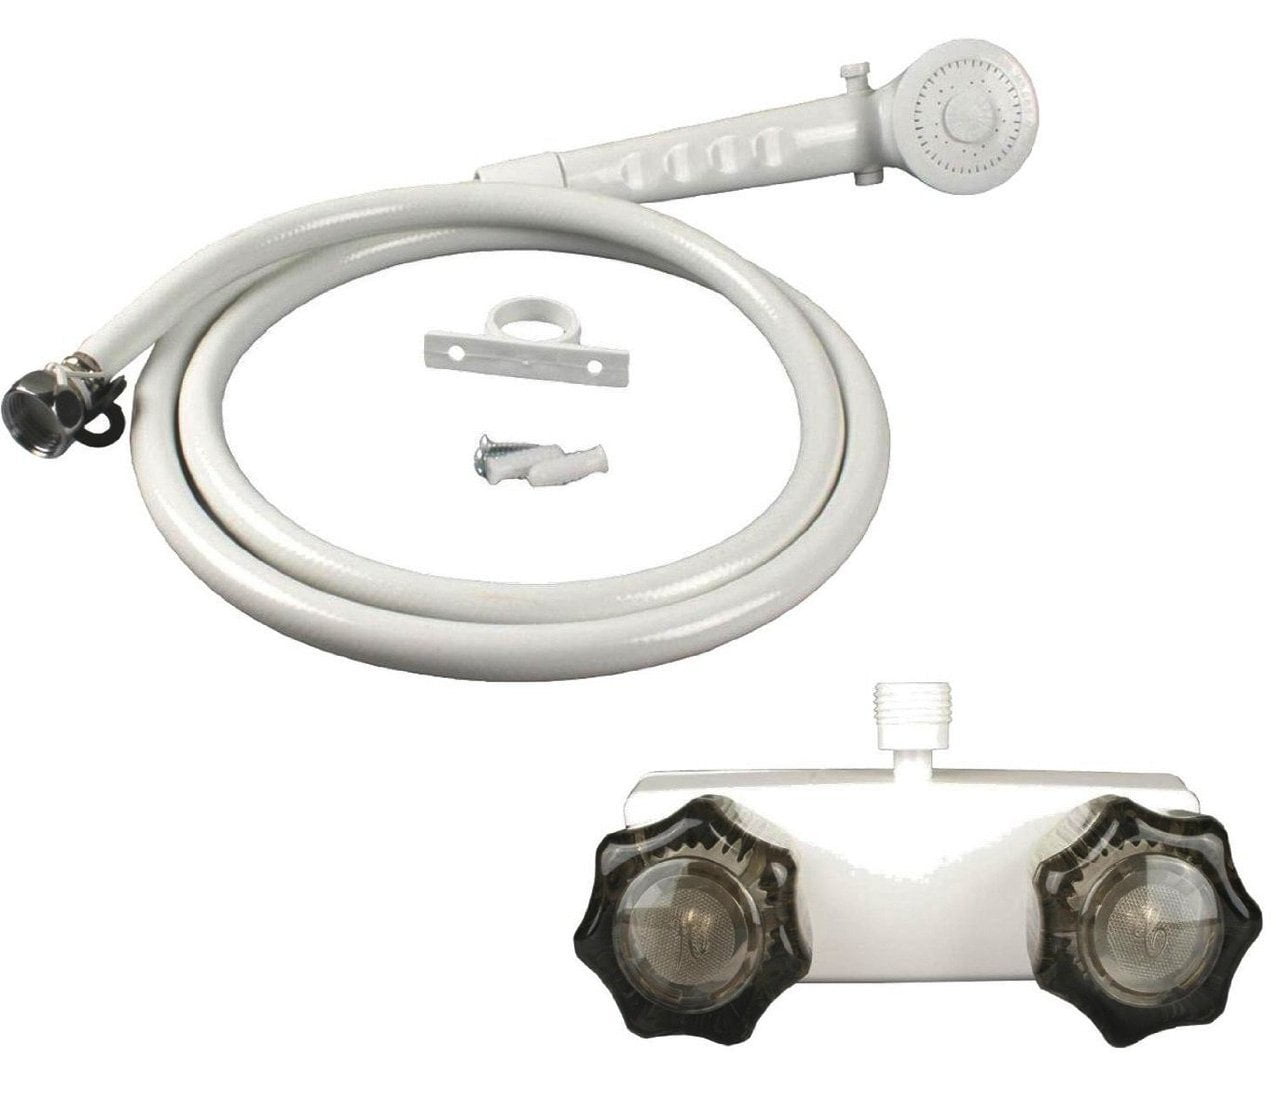 PIH High Pressure RV Handheld Shower HEAD Unit With Powerful Spray W/ for sale online 